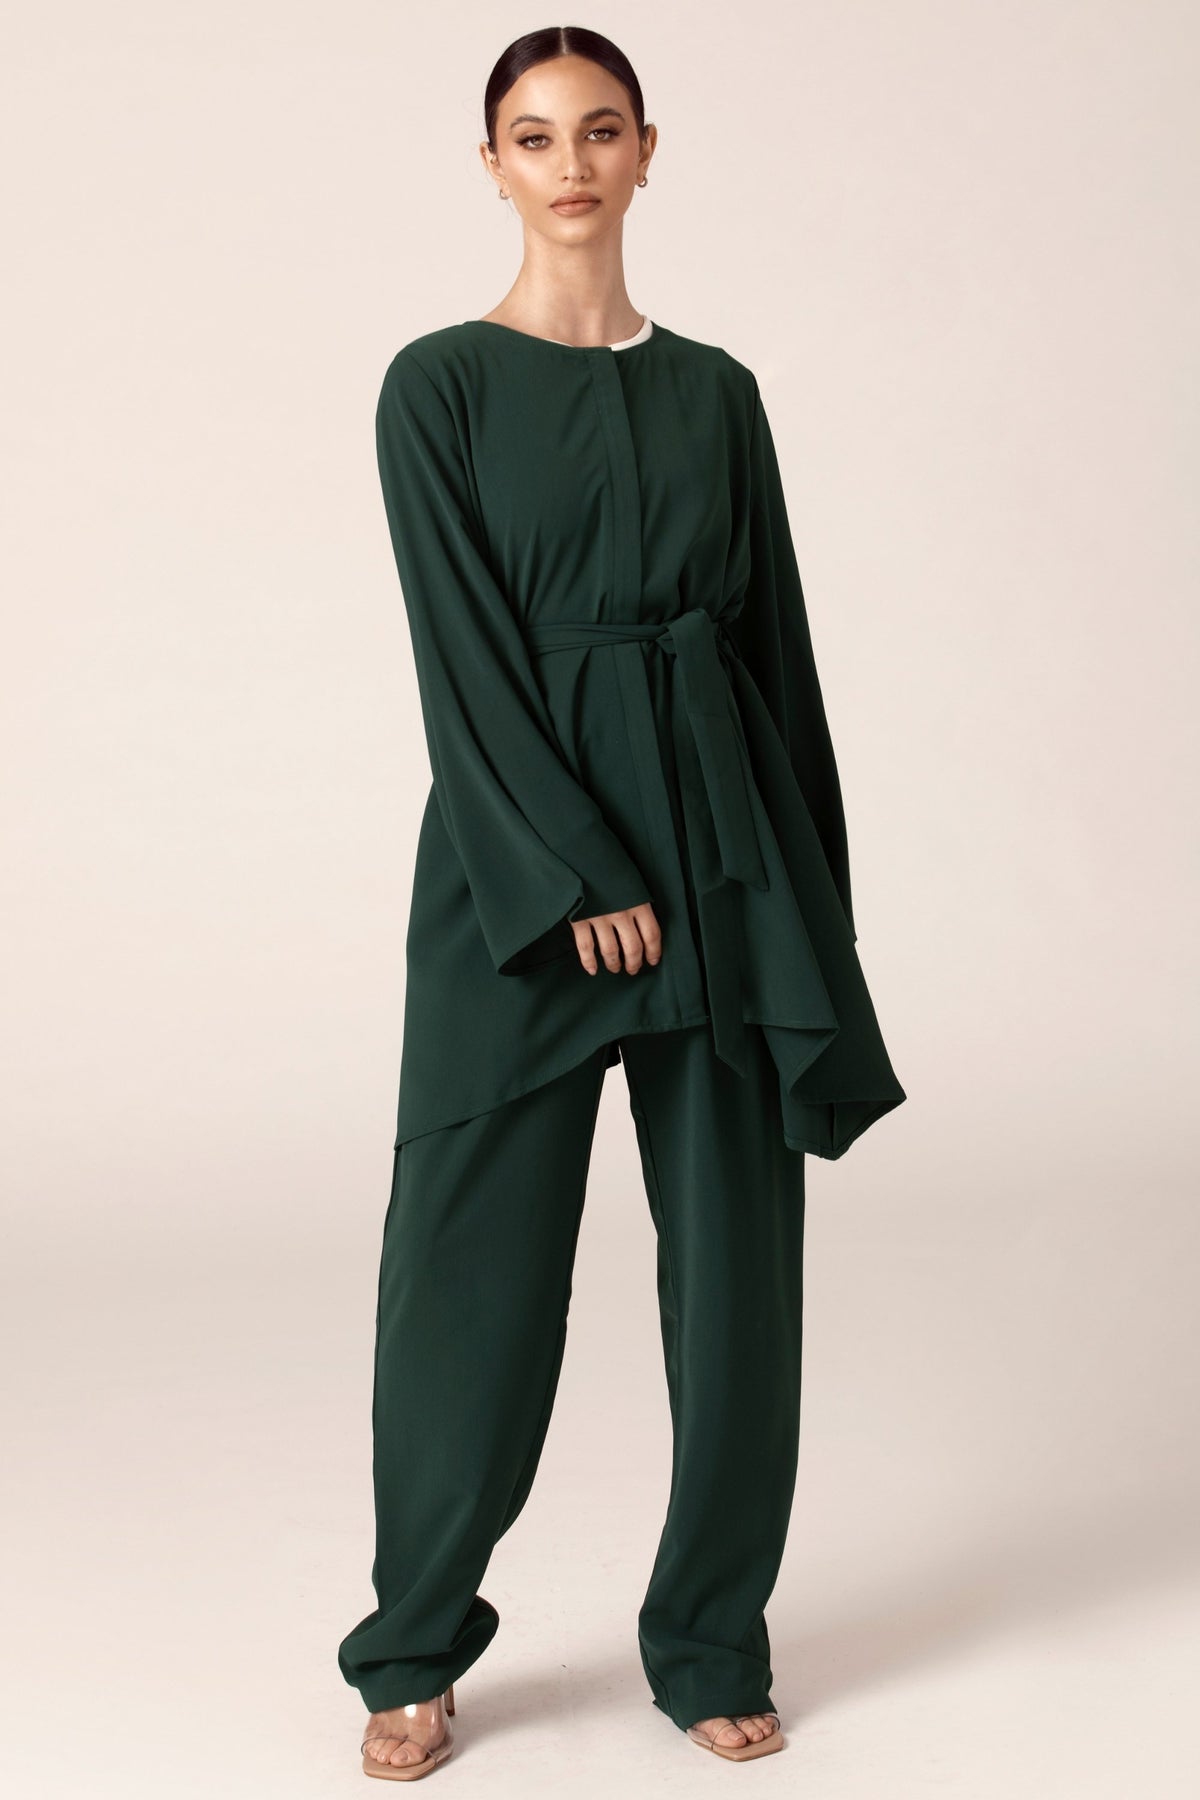 Emerald Top & Pants Matching Set Clothing saigonodysseyhotel 